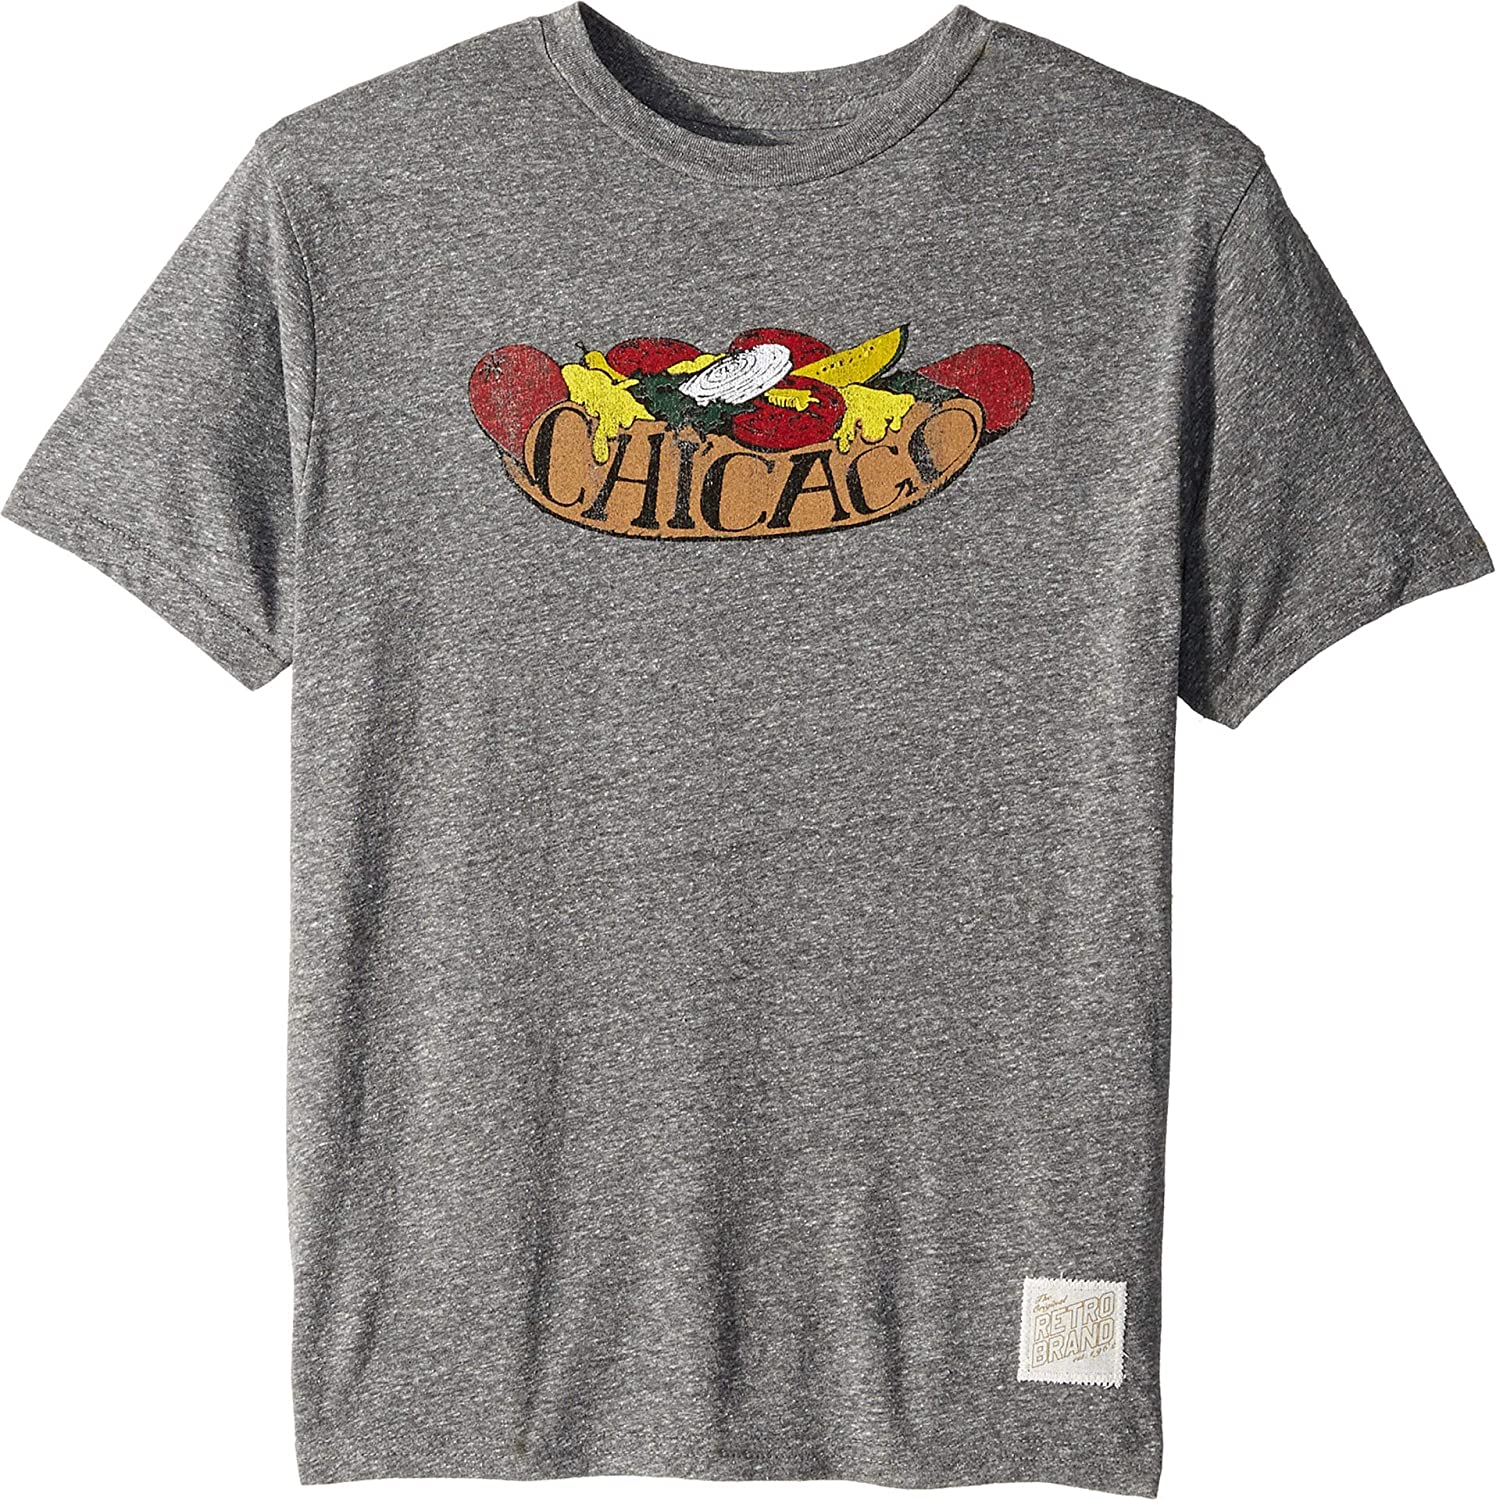 Chicago Hot Dog T-Shirt